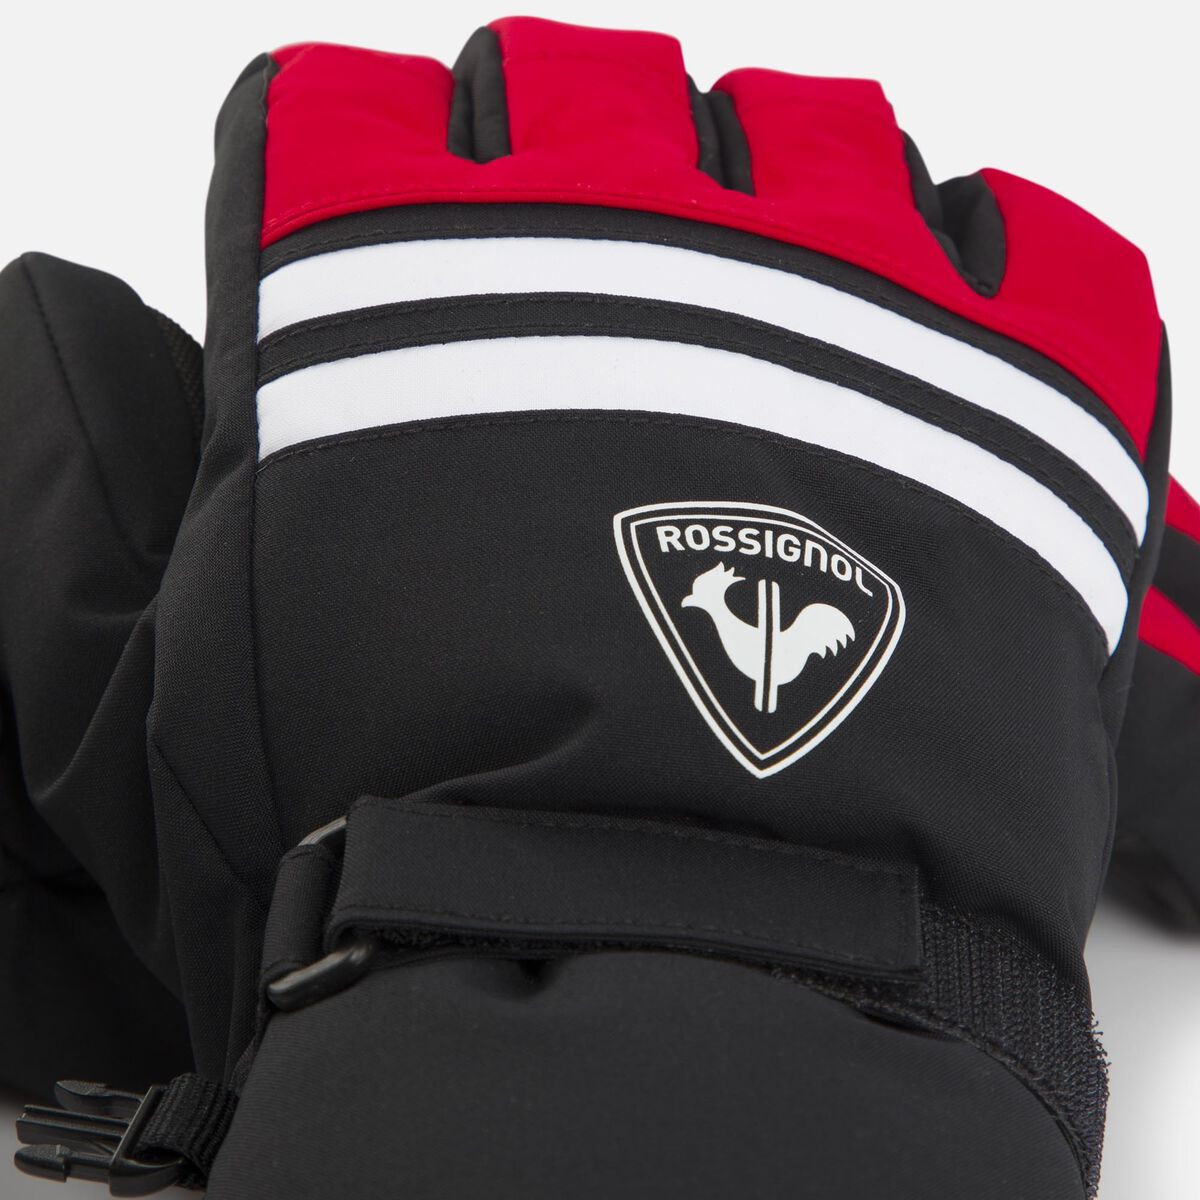 Rossignol Men's action waterproof ski gloves Red